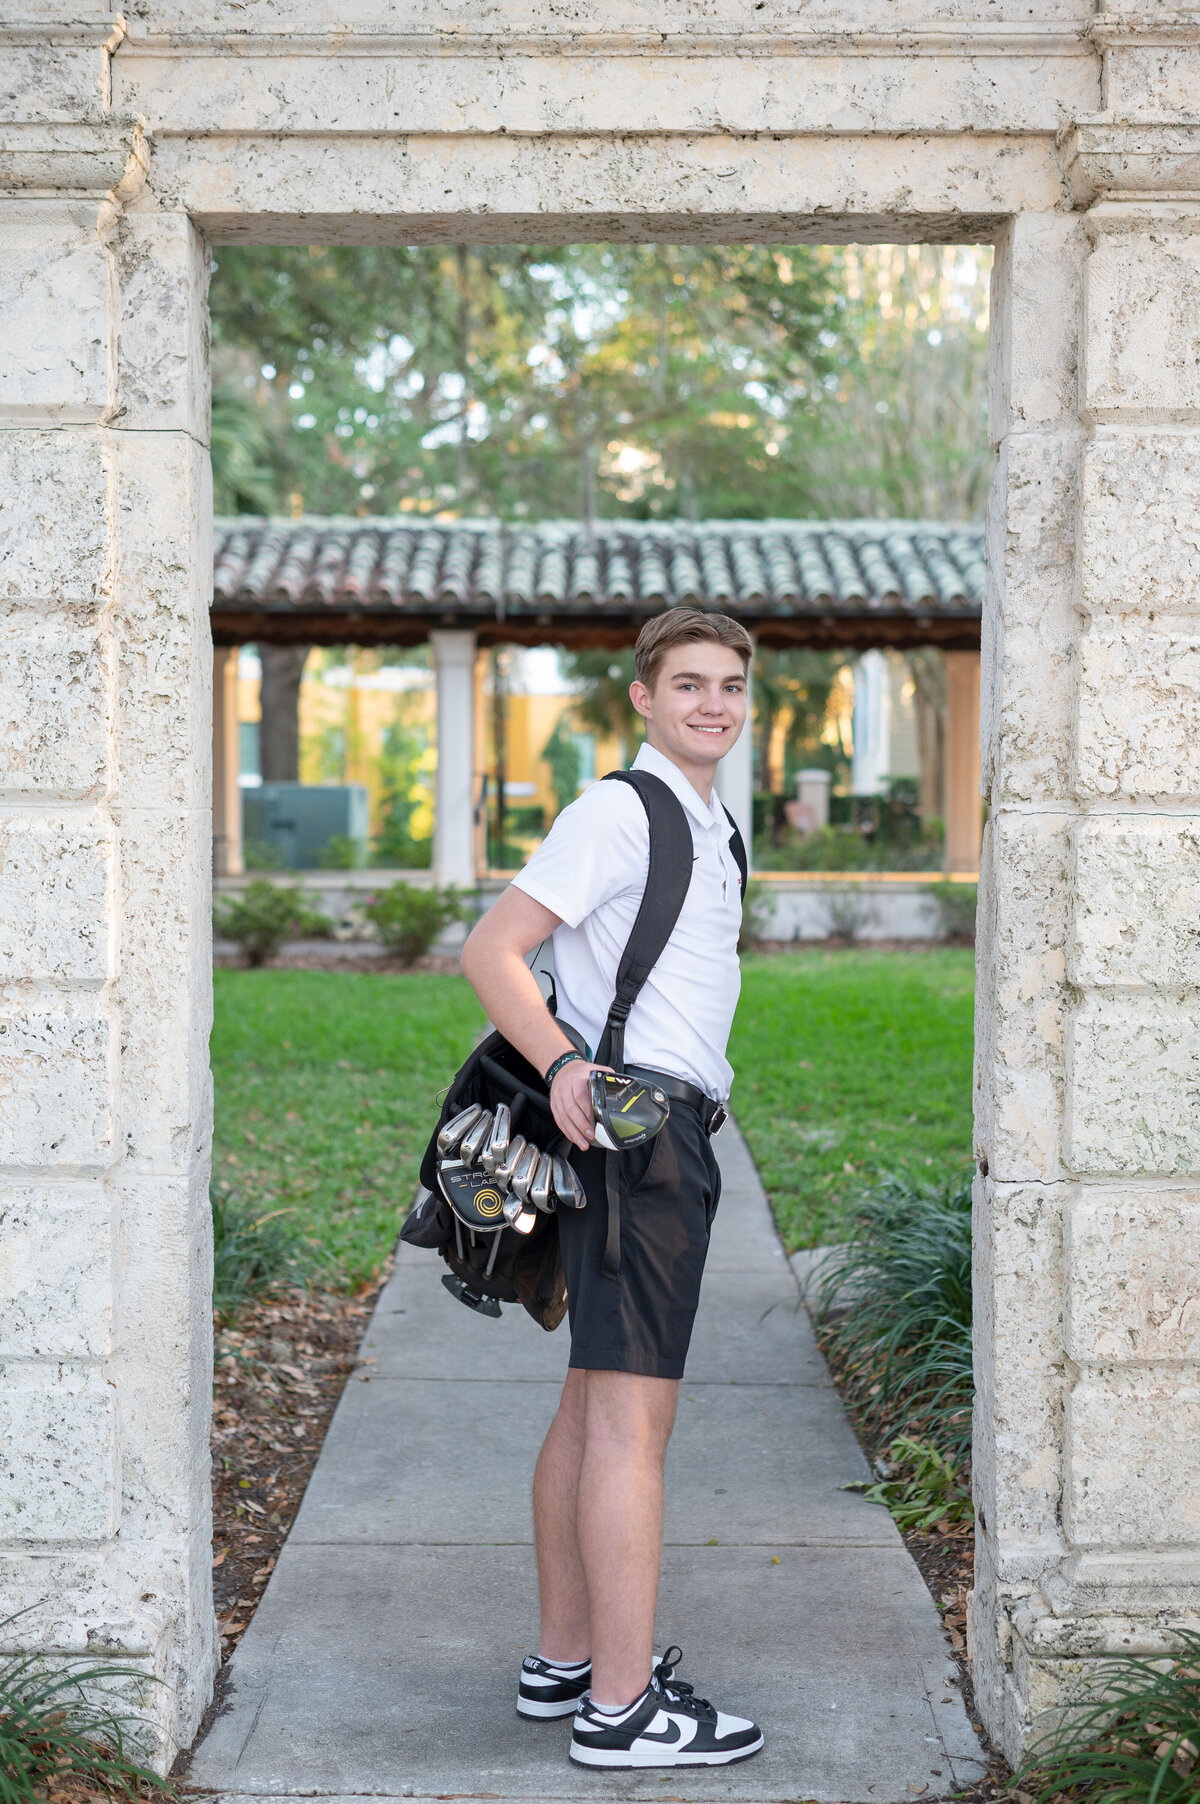 High school senior boy wearing a golf bag looks back to camera smiling.